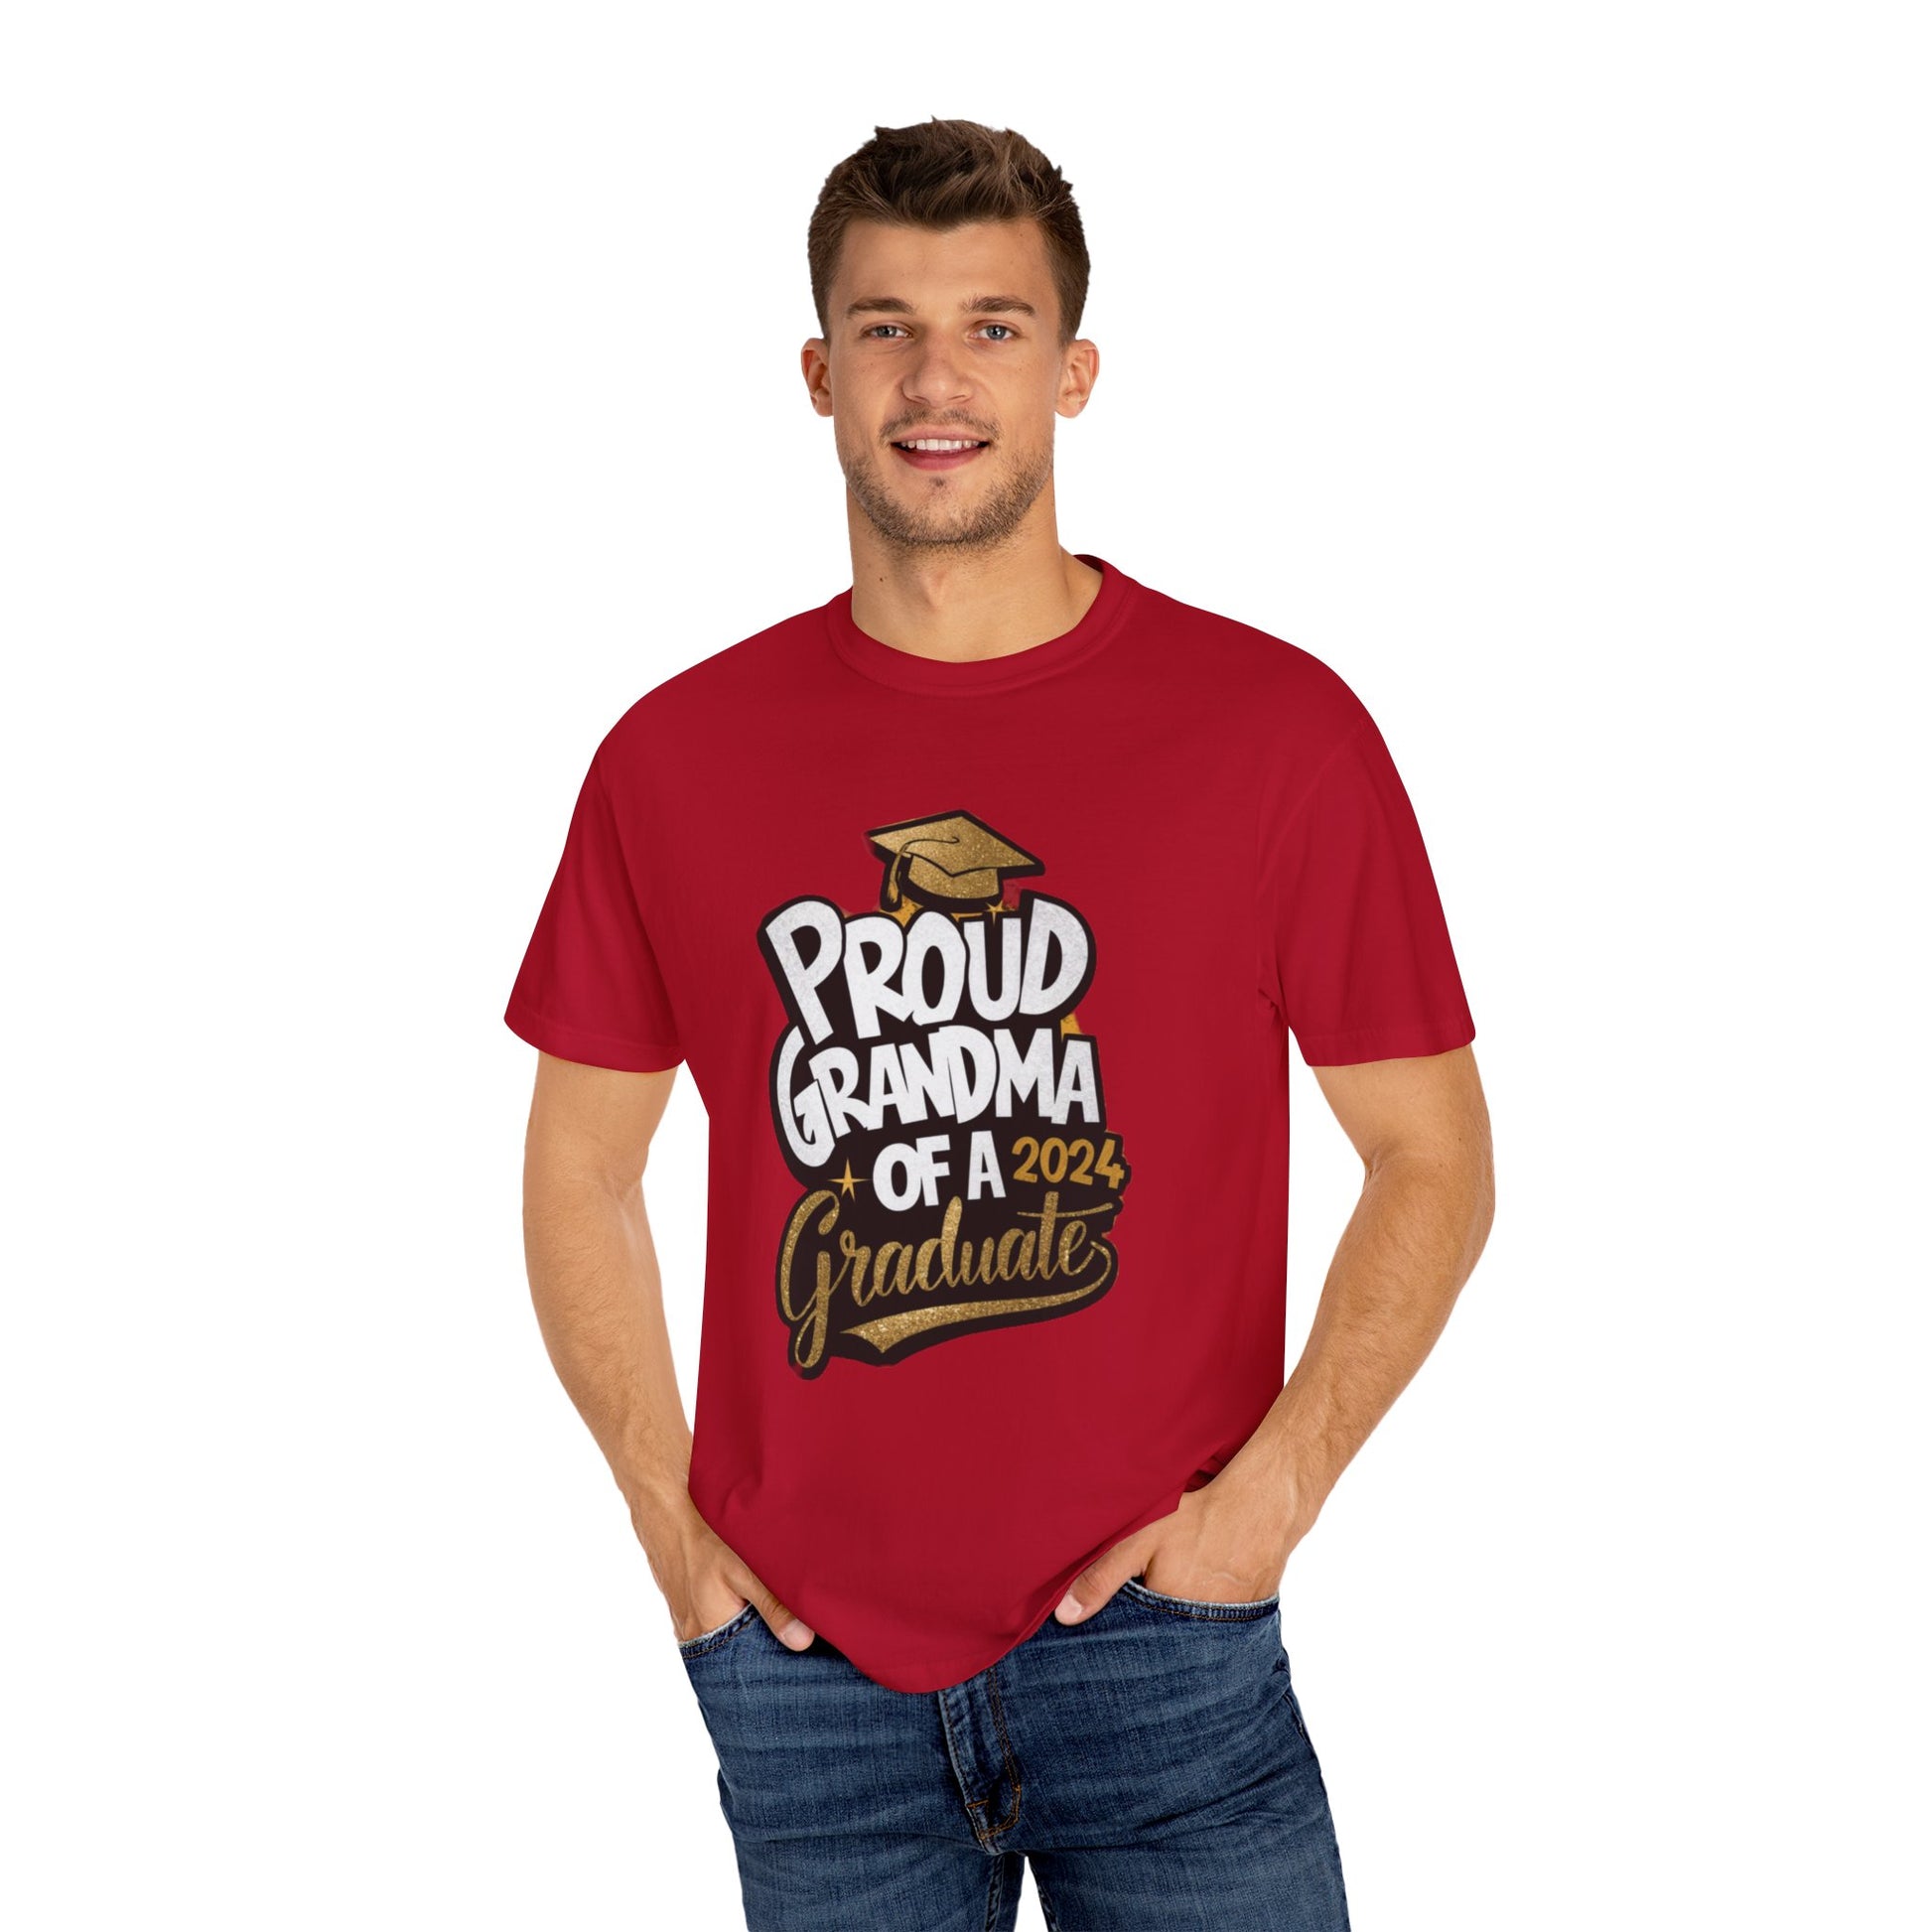 Proud of Grandma 2024 Graduate Unisex Garment-dyed T-shirt Cotton Funny Humorous Graphic Soft Premium Unisex Men Women Red T-shirt Birthday Gift-21